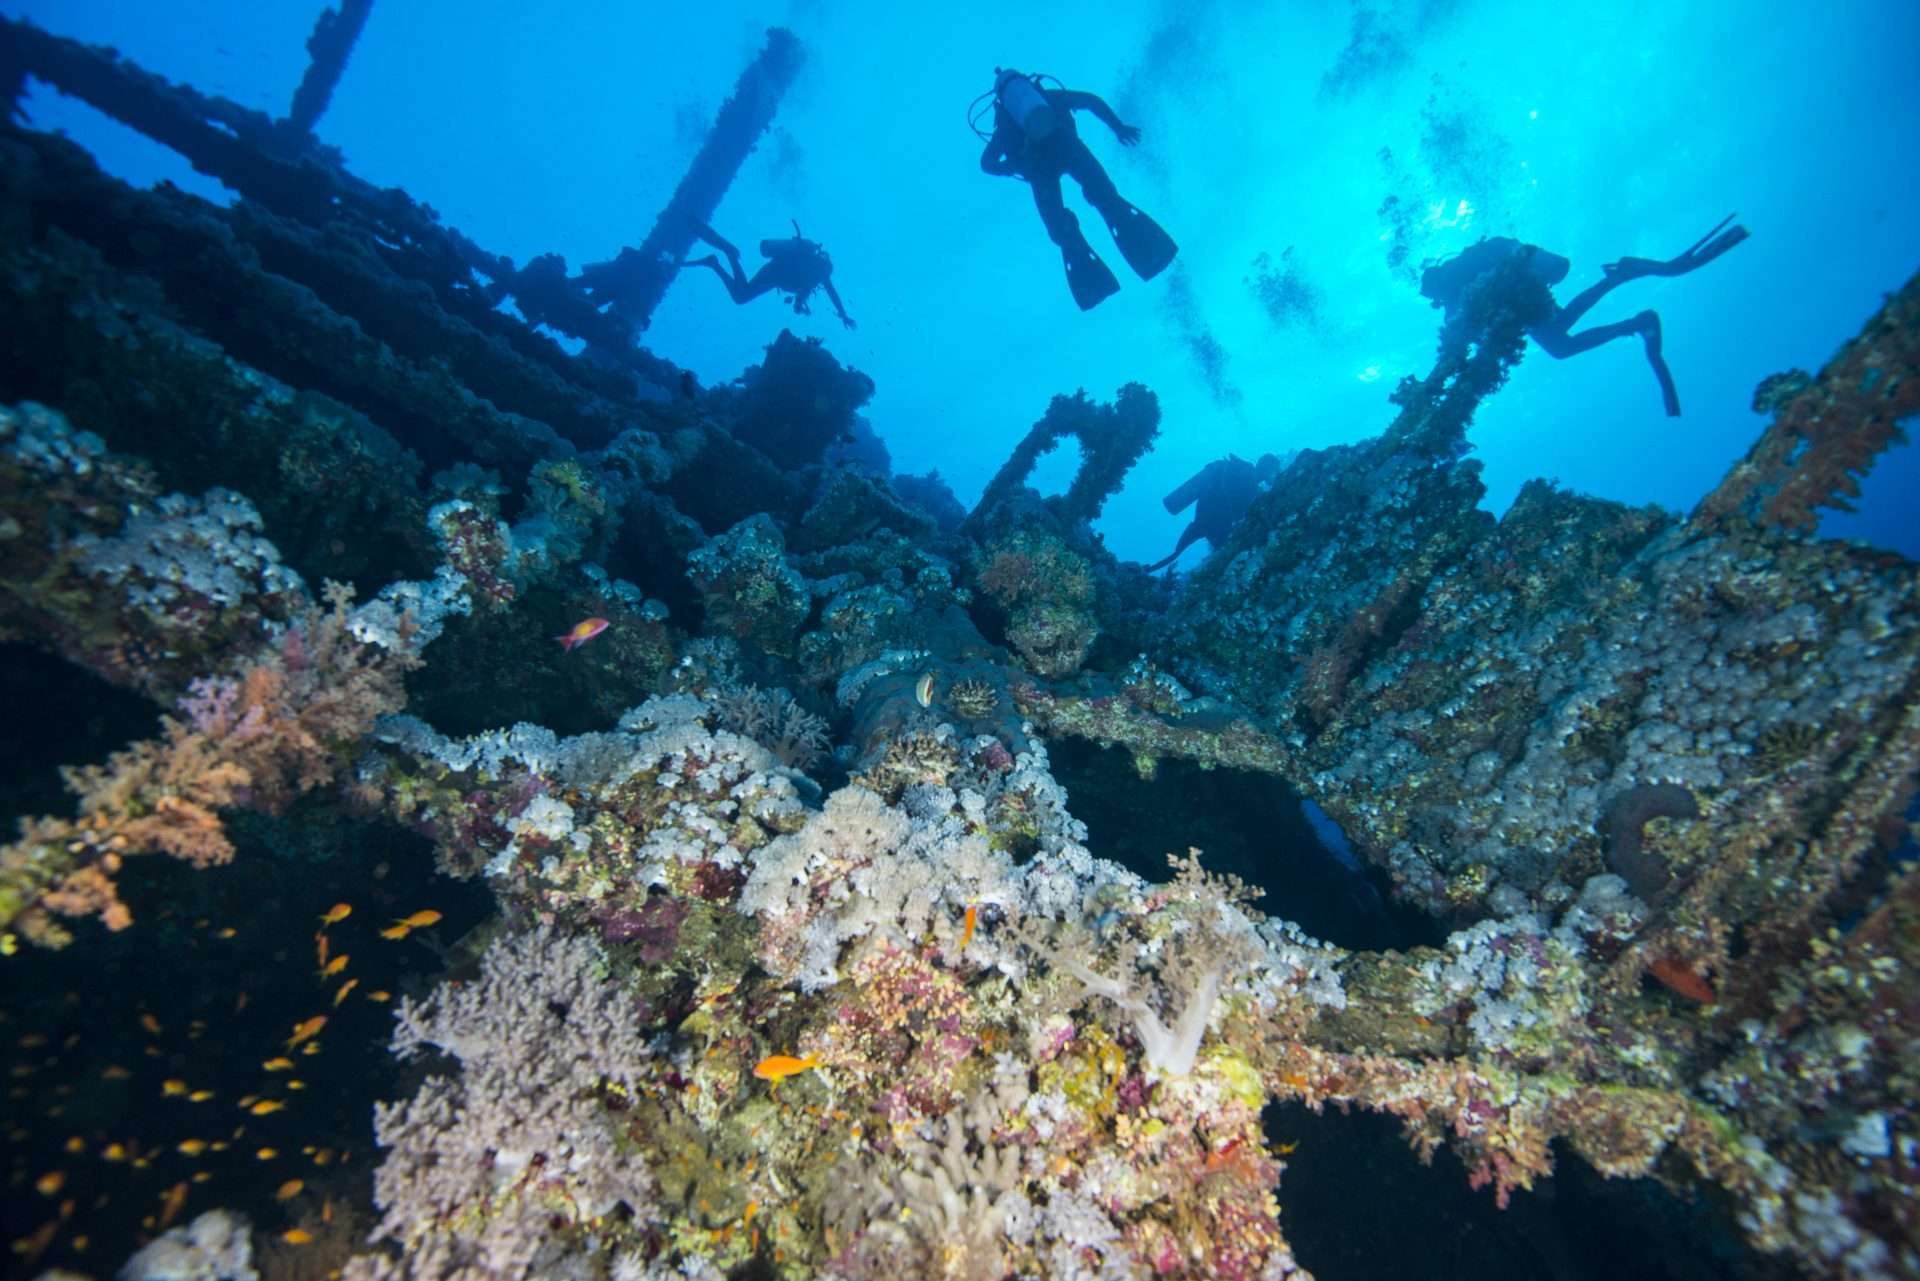 Scuba divers swimming through shipwreck